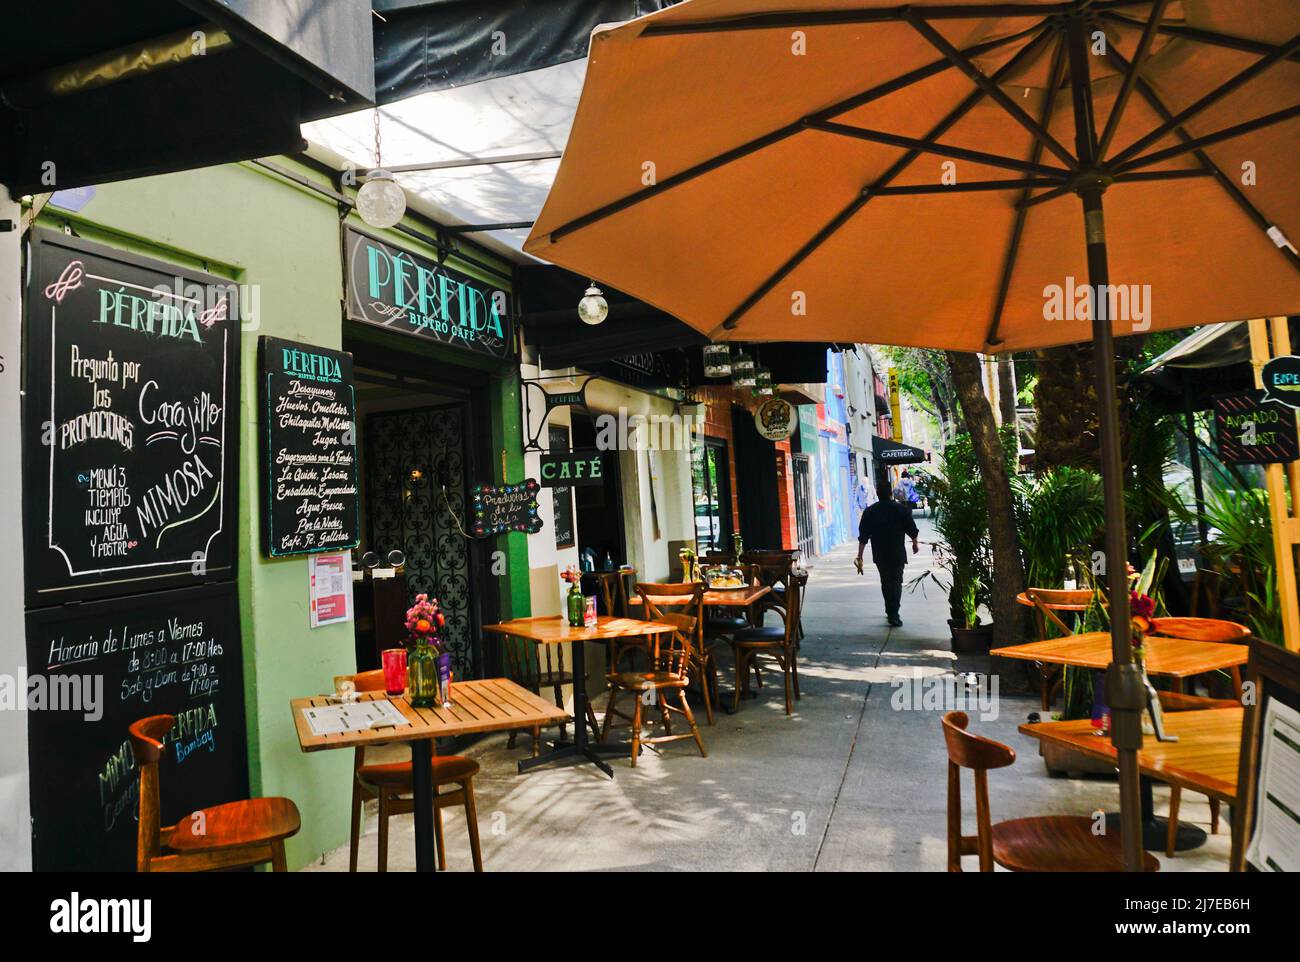 Perfida Bistro Cafe in the Colonia Condesa neighborhood of Mexico City, Mexico. Stock Photo